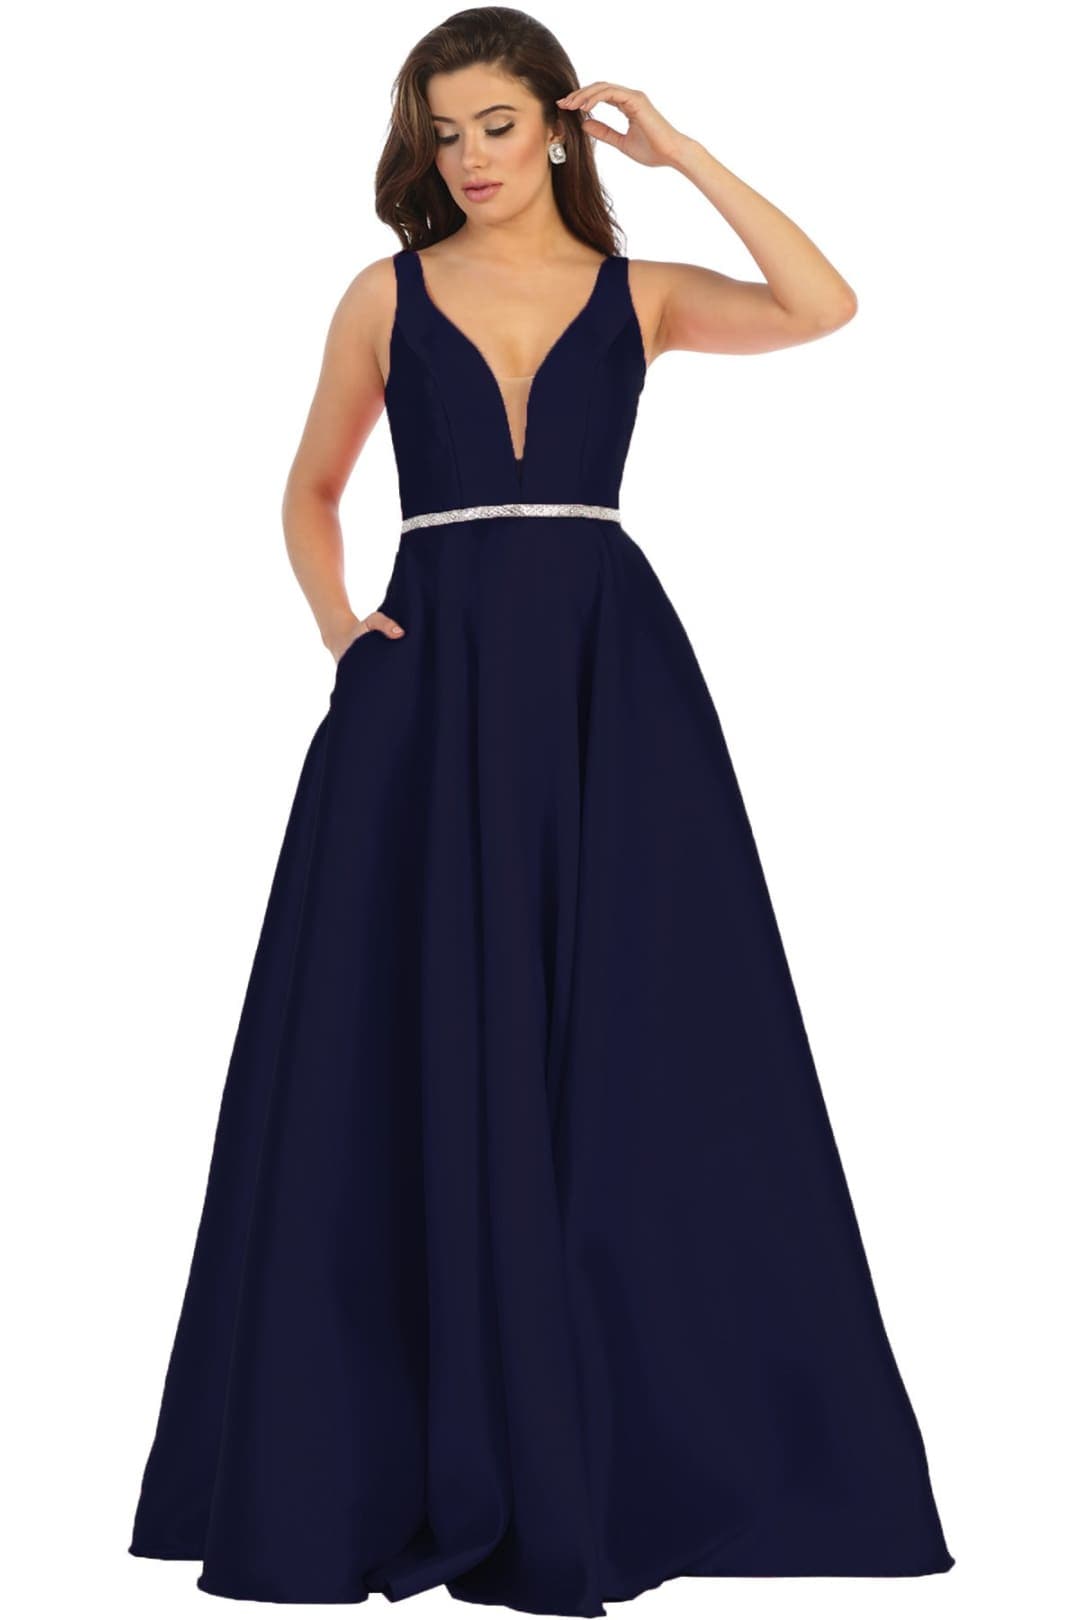 Simple Sleeveless Prom Dress - Navy / 4